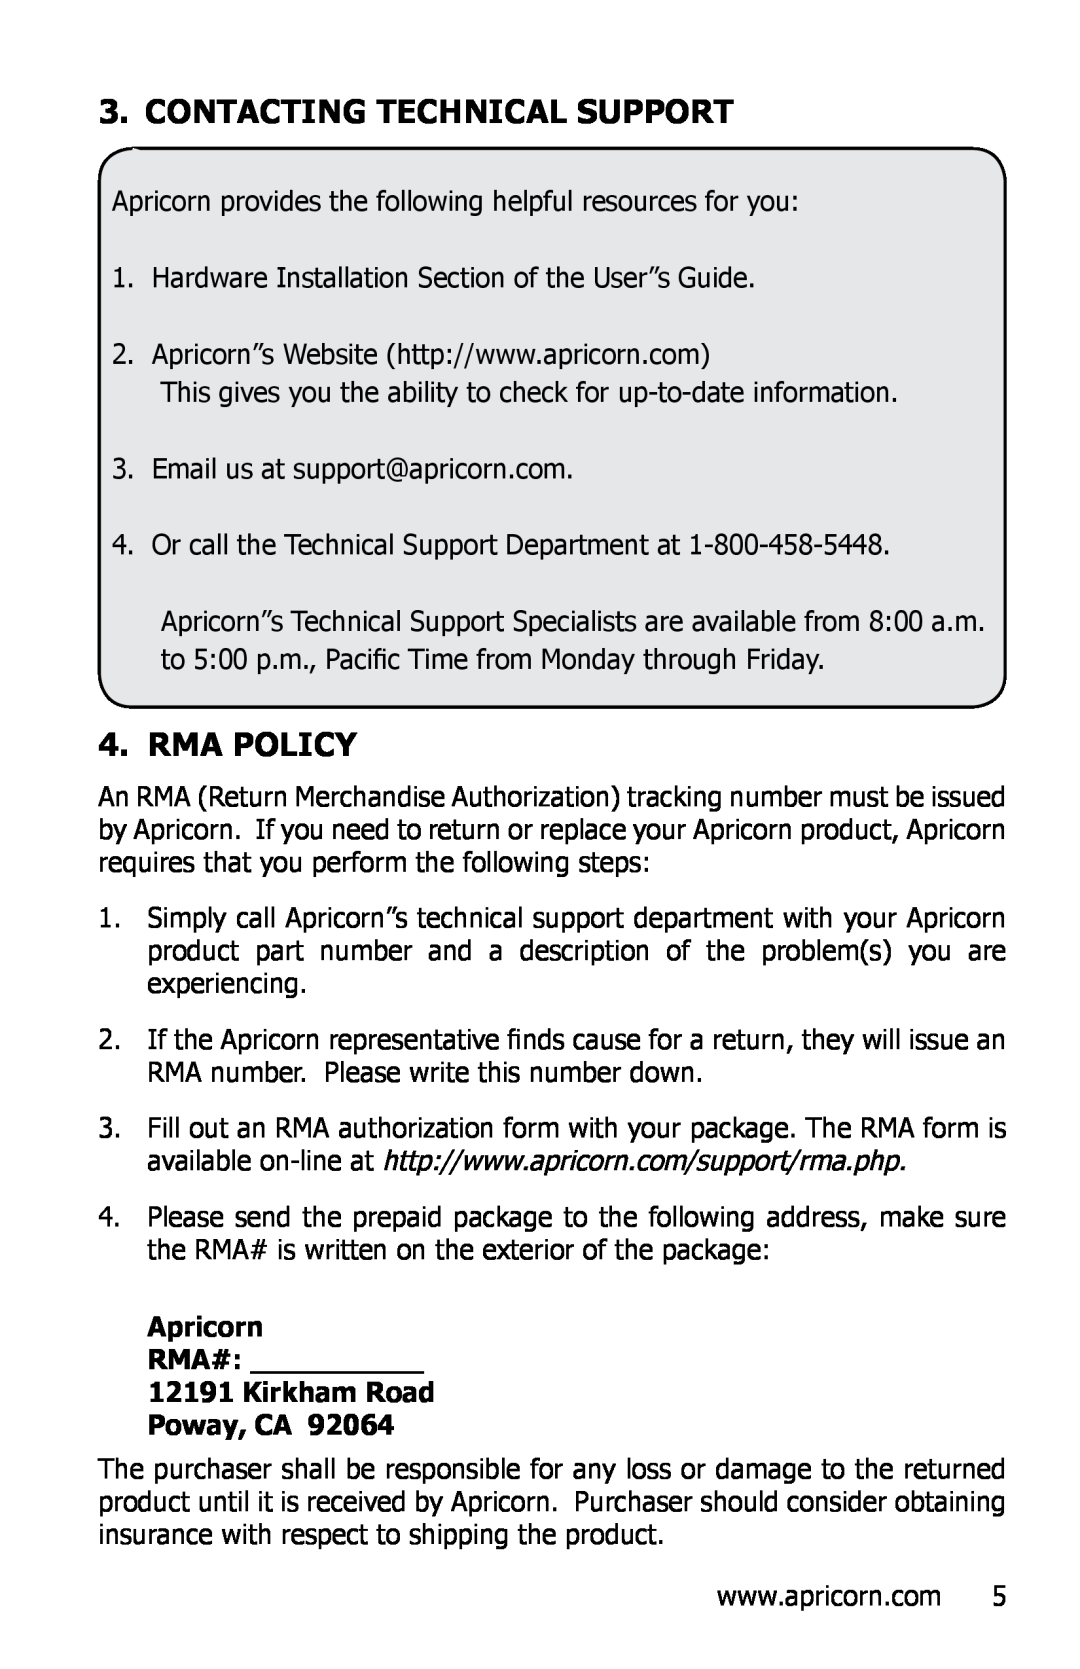 Apricorn N/A manual Contacting Technical Support, Rma Policy, Apricorn RMA# 12191 Kirkham Road Poway, CA 